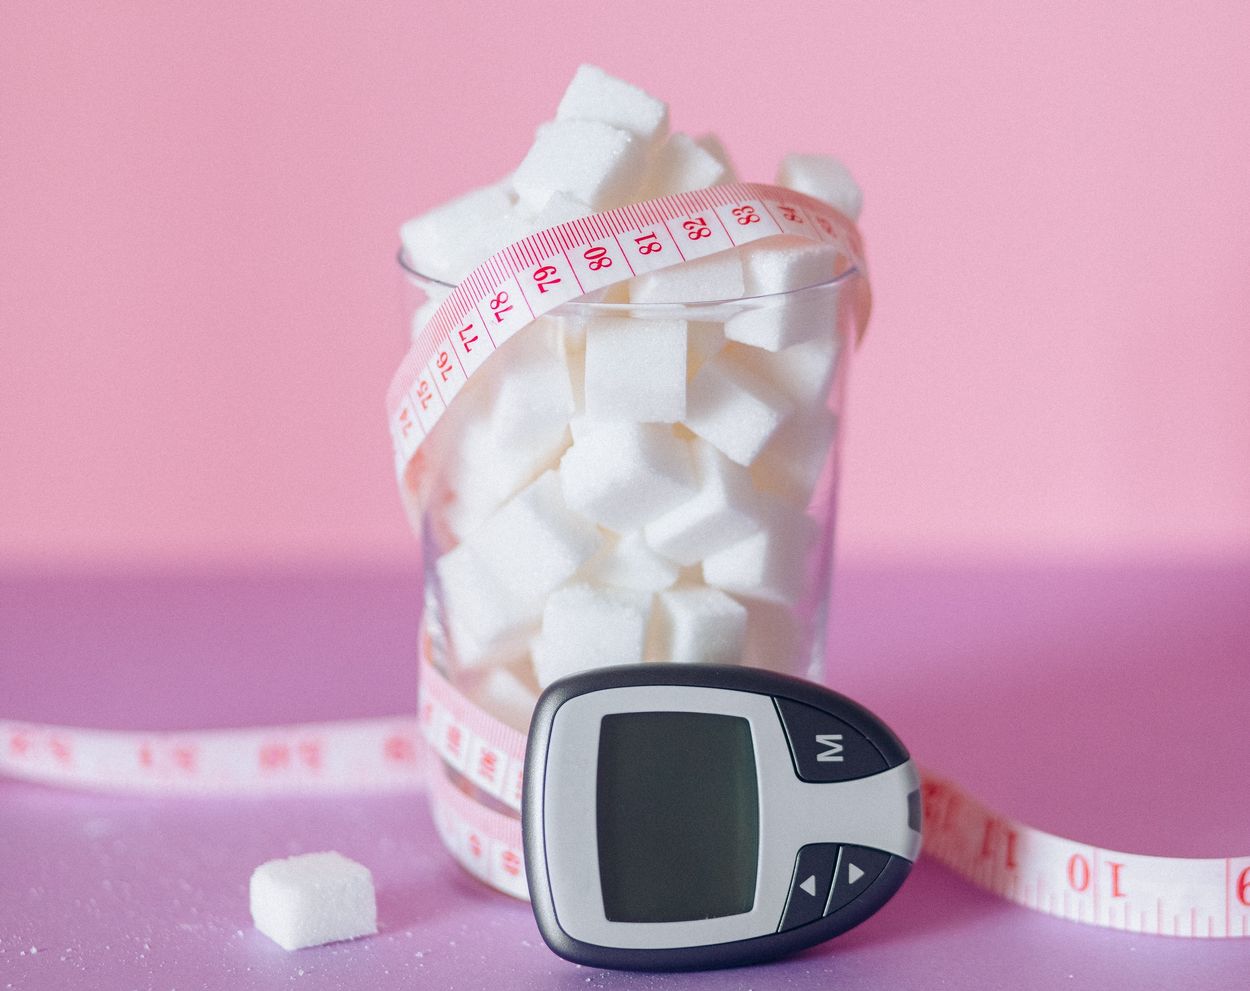 sugar and glucose monitor